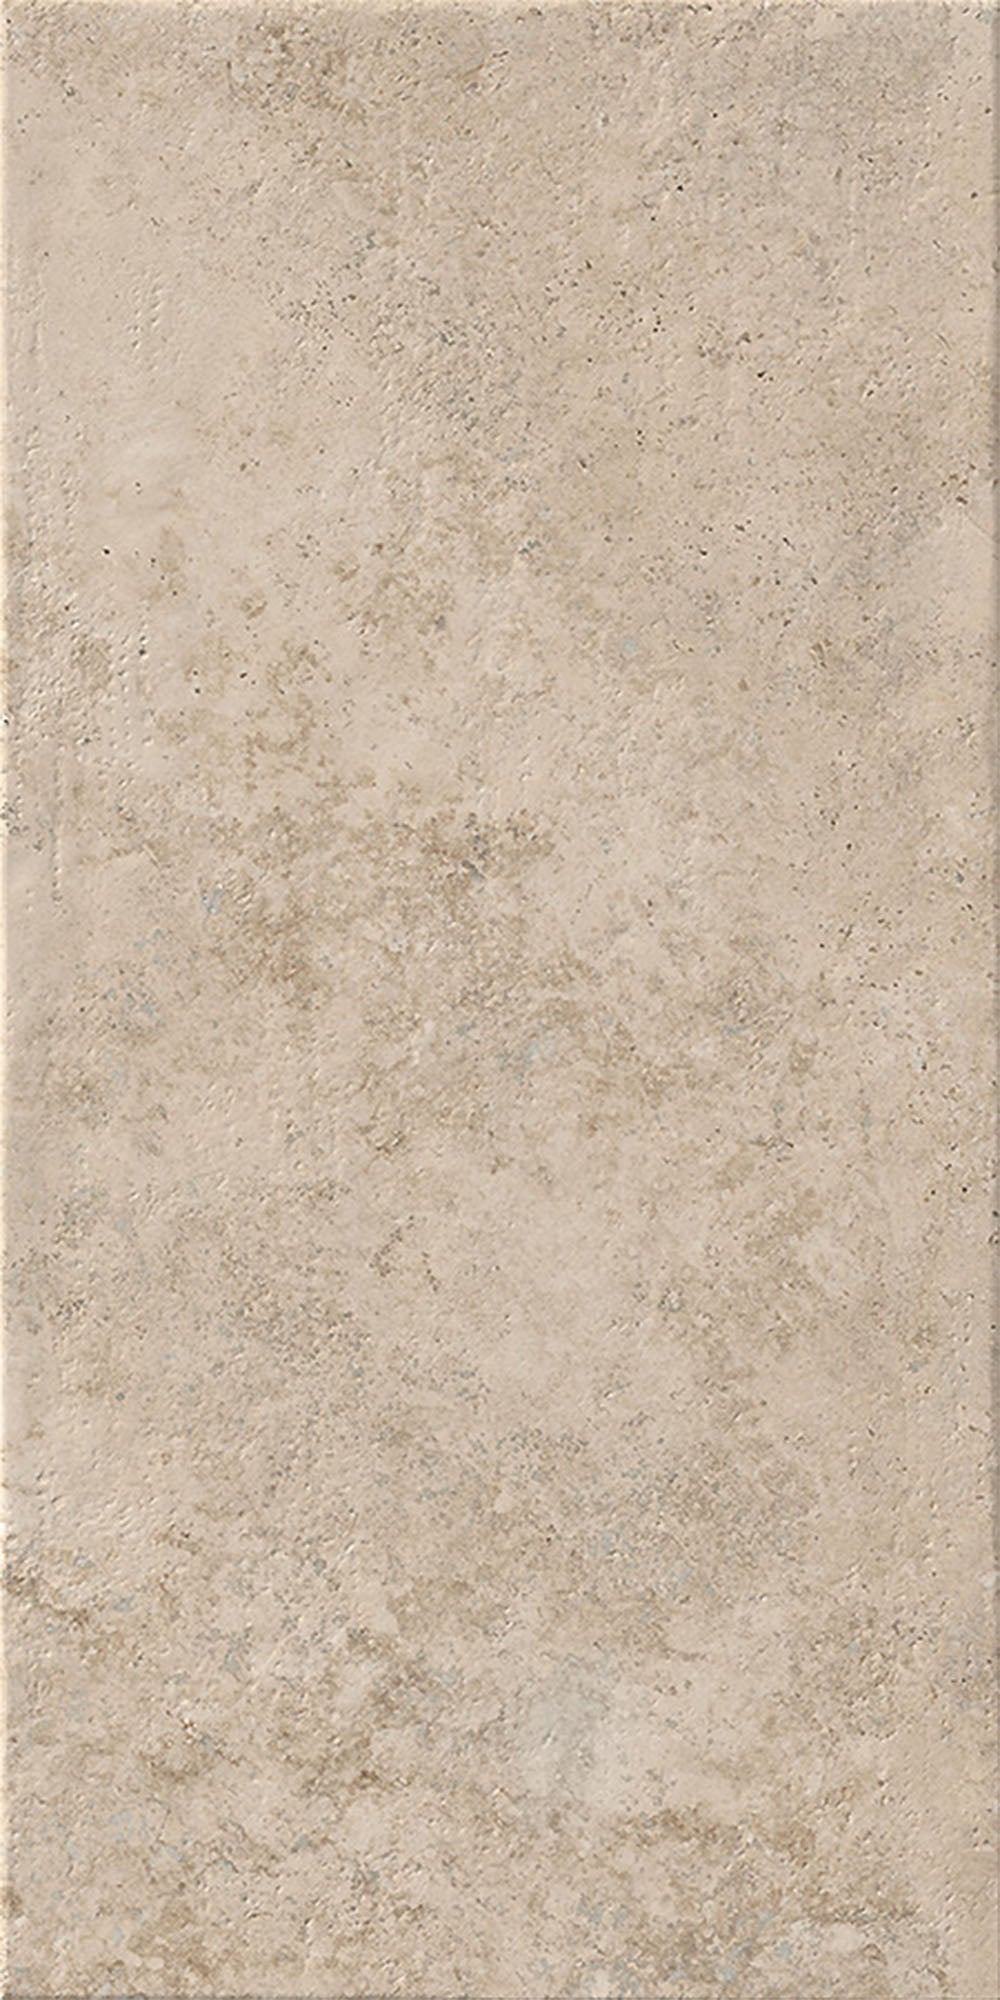 cervati mocha stone effect porcelain tile 60x120cm matt